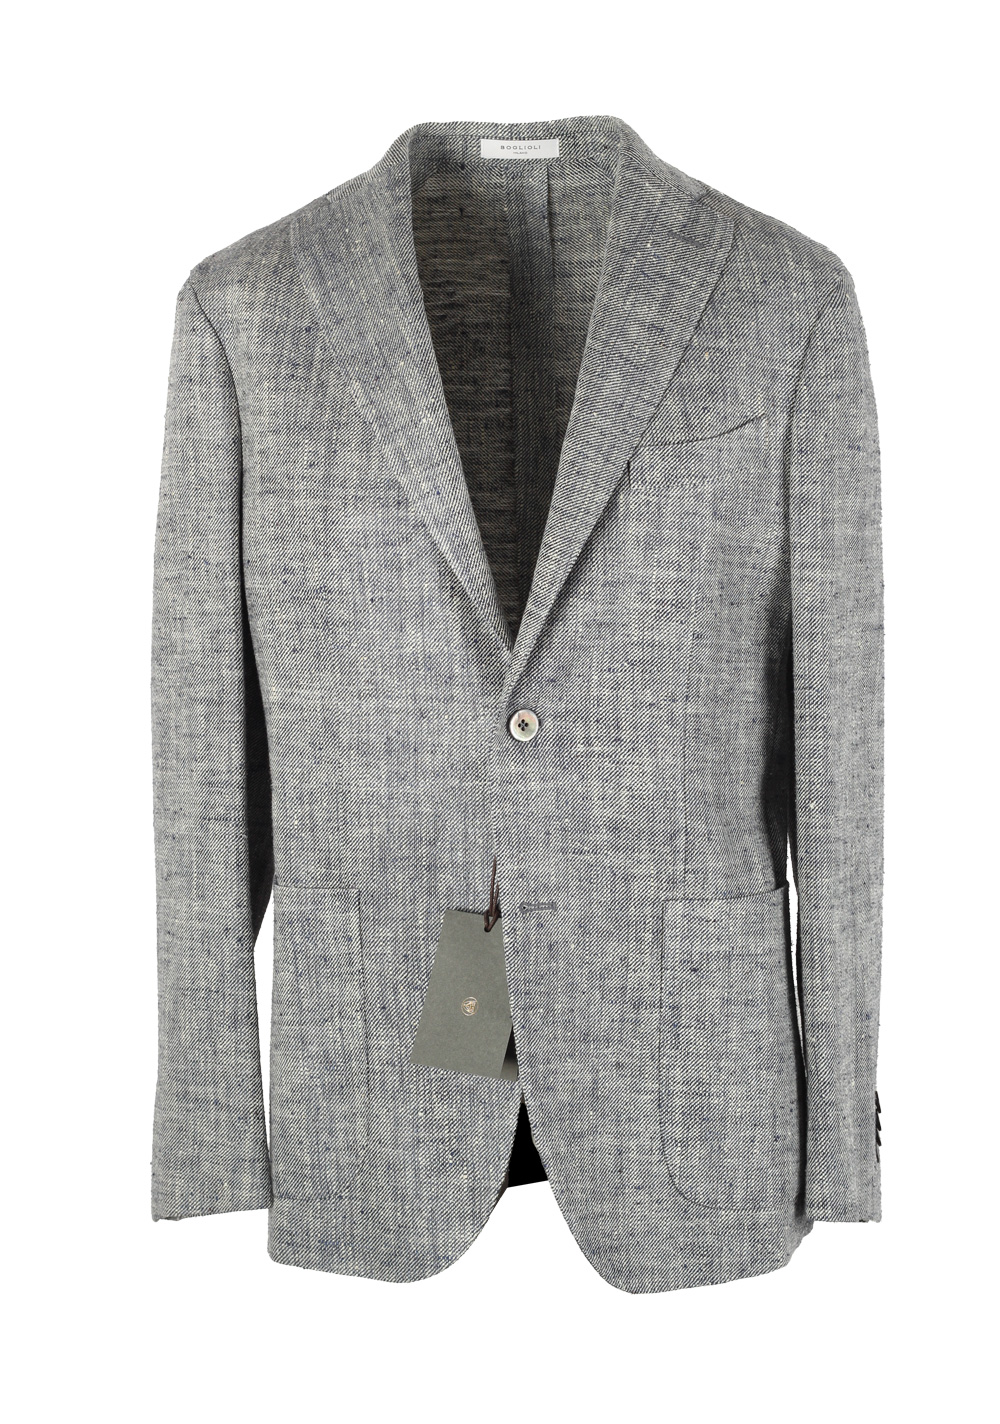 Boglioli K Jacket Gray Sport Coat Size 46 / 36R U.S. | Costume Limité